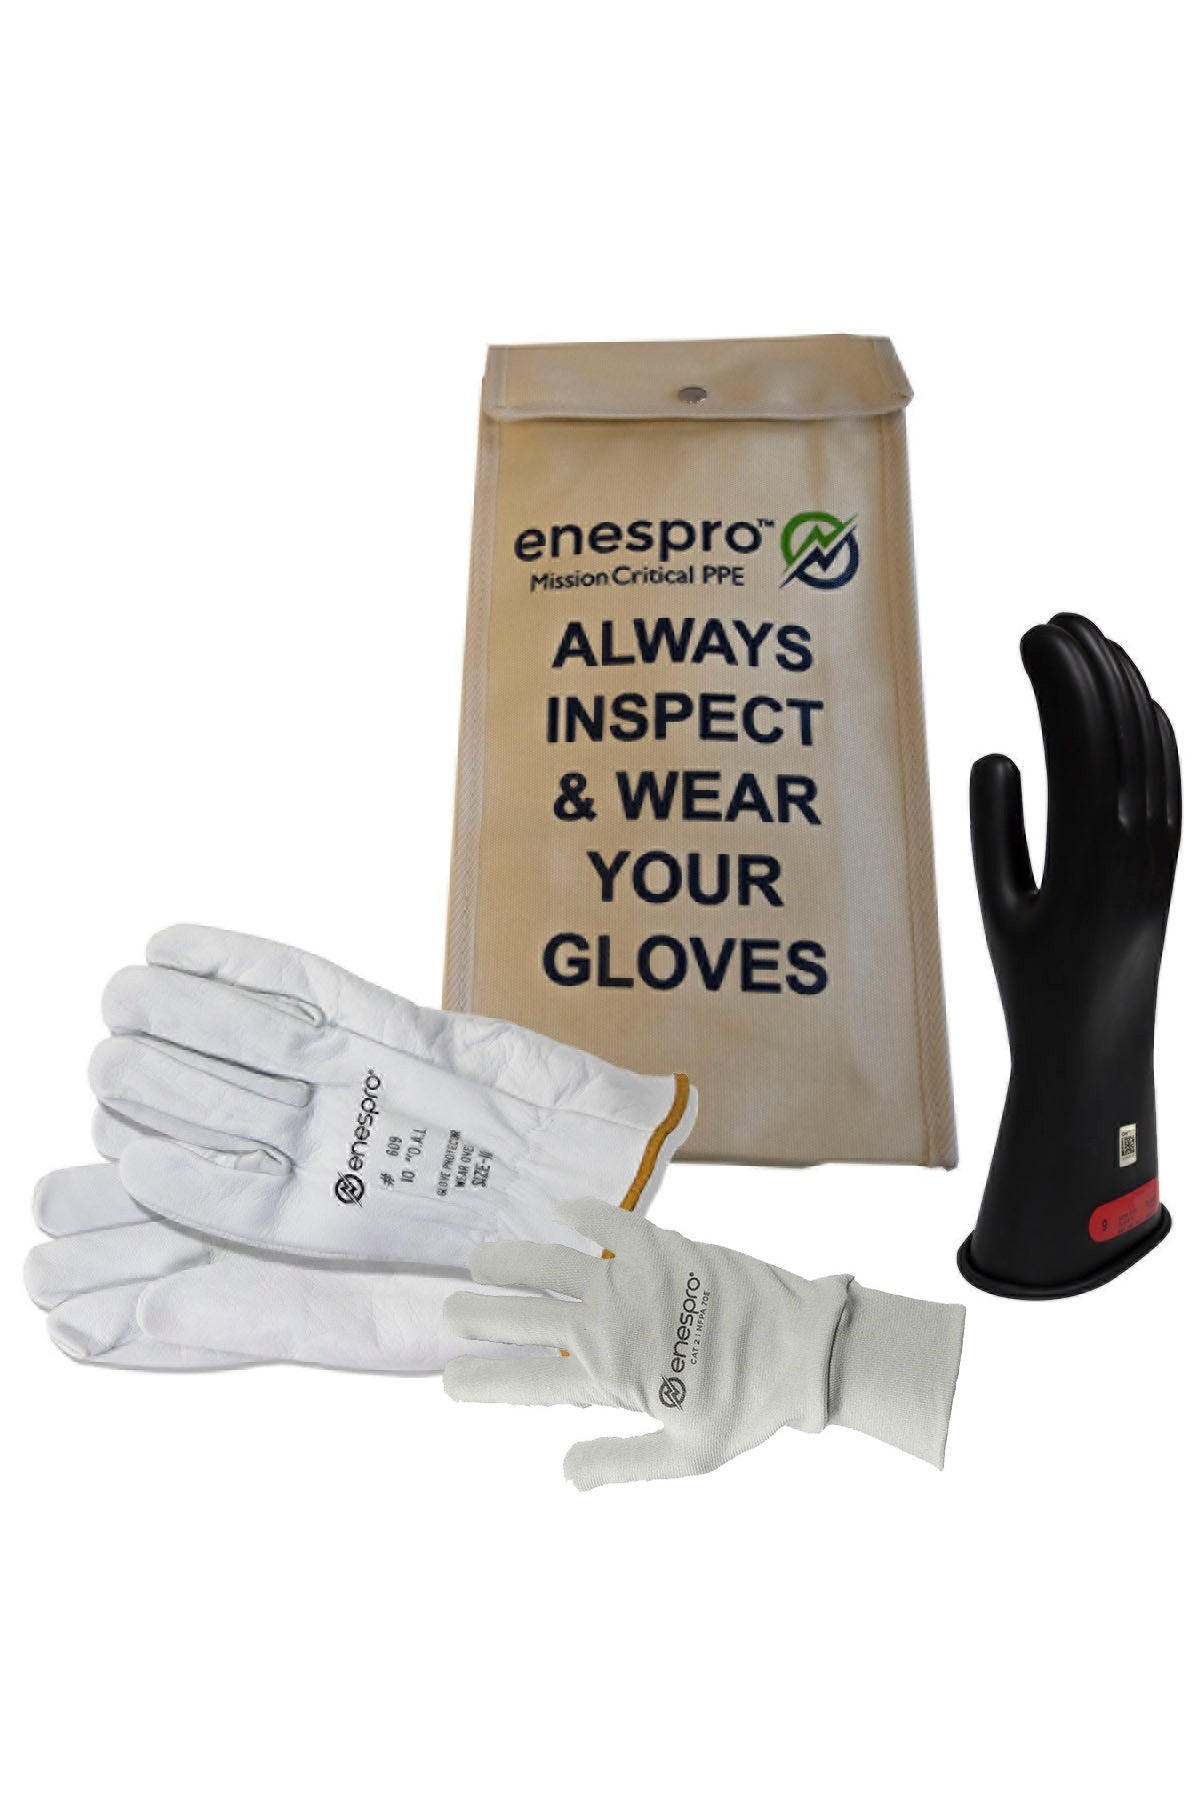 Enespro Class 0 Voltage 11" Glove Kit with FR Liner Glove